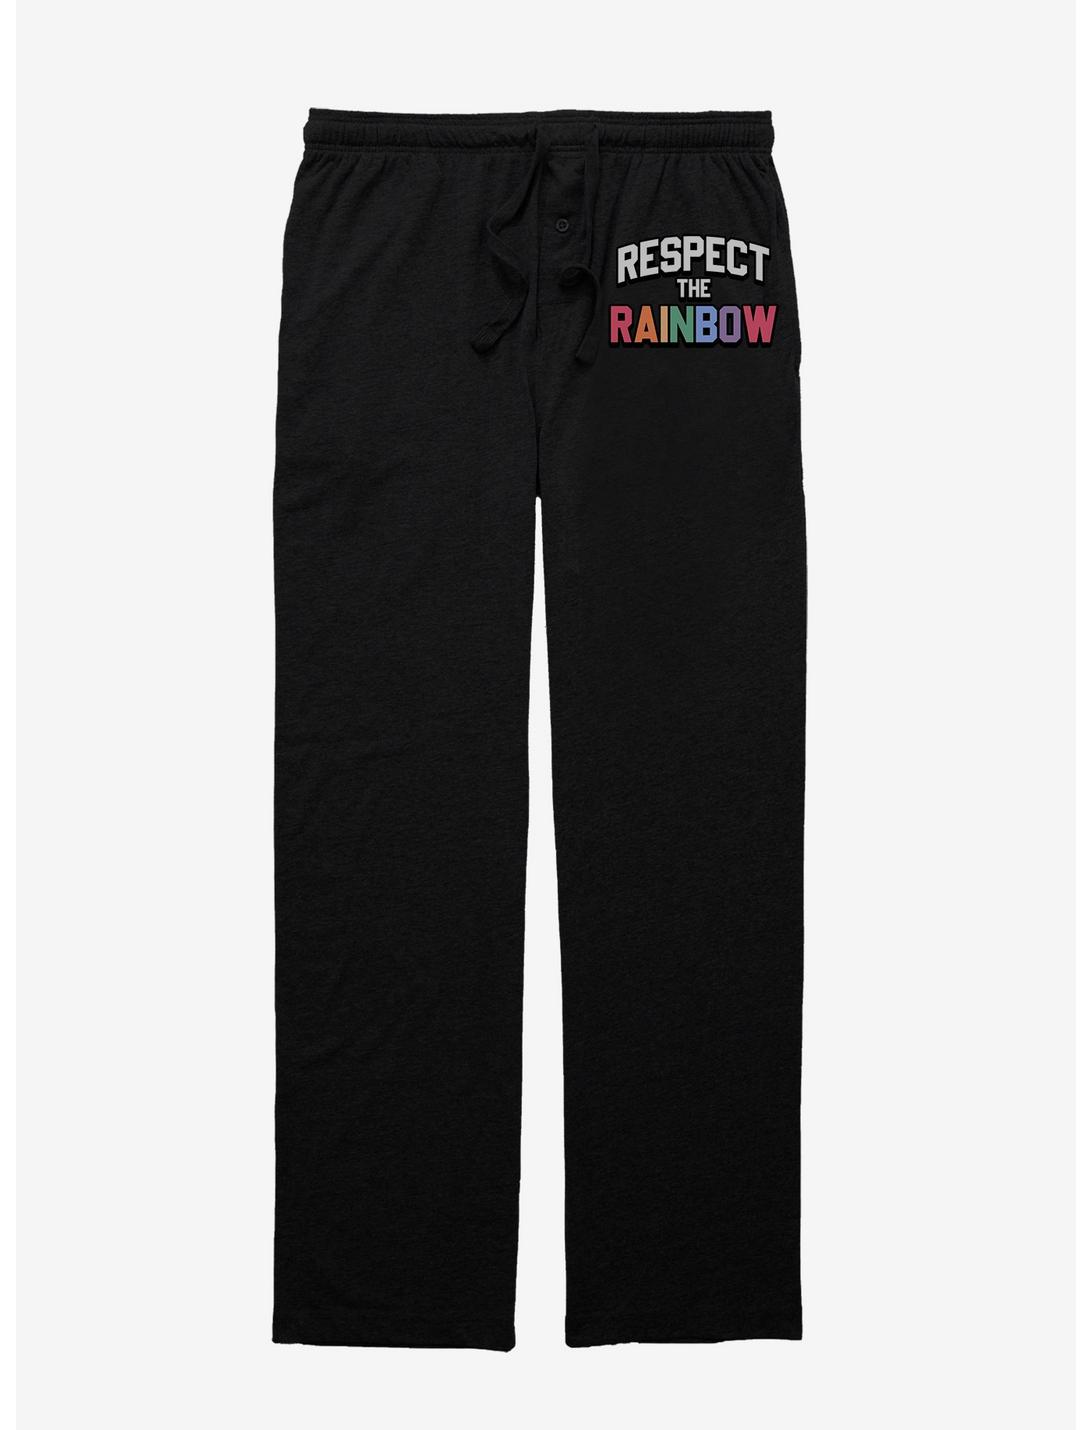 Respect The Rainbow Pajama Pants, BLACK, hi-res